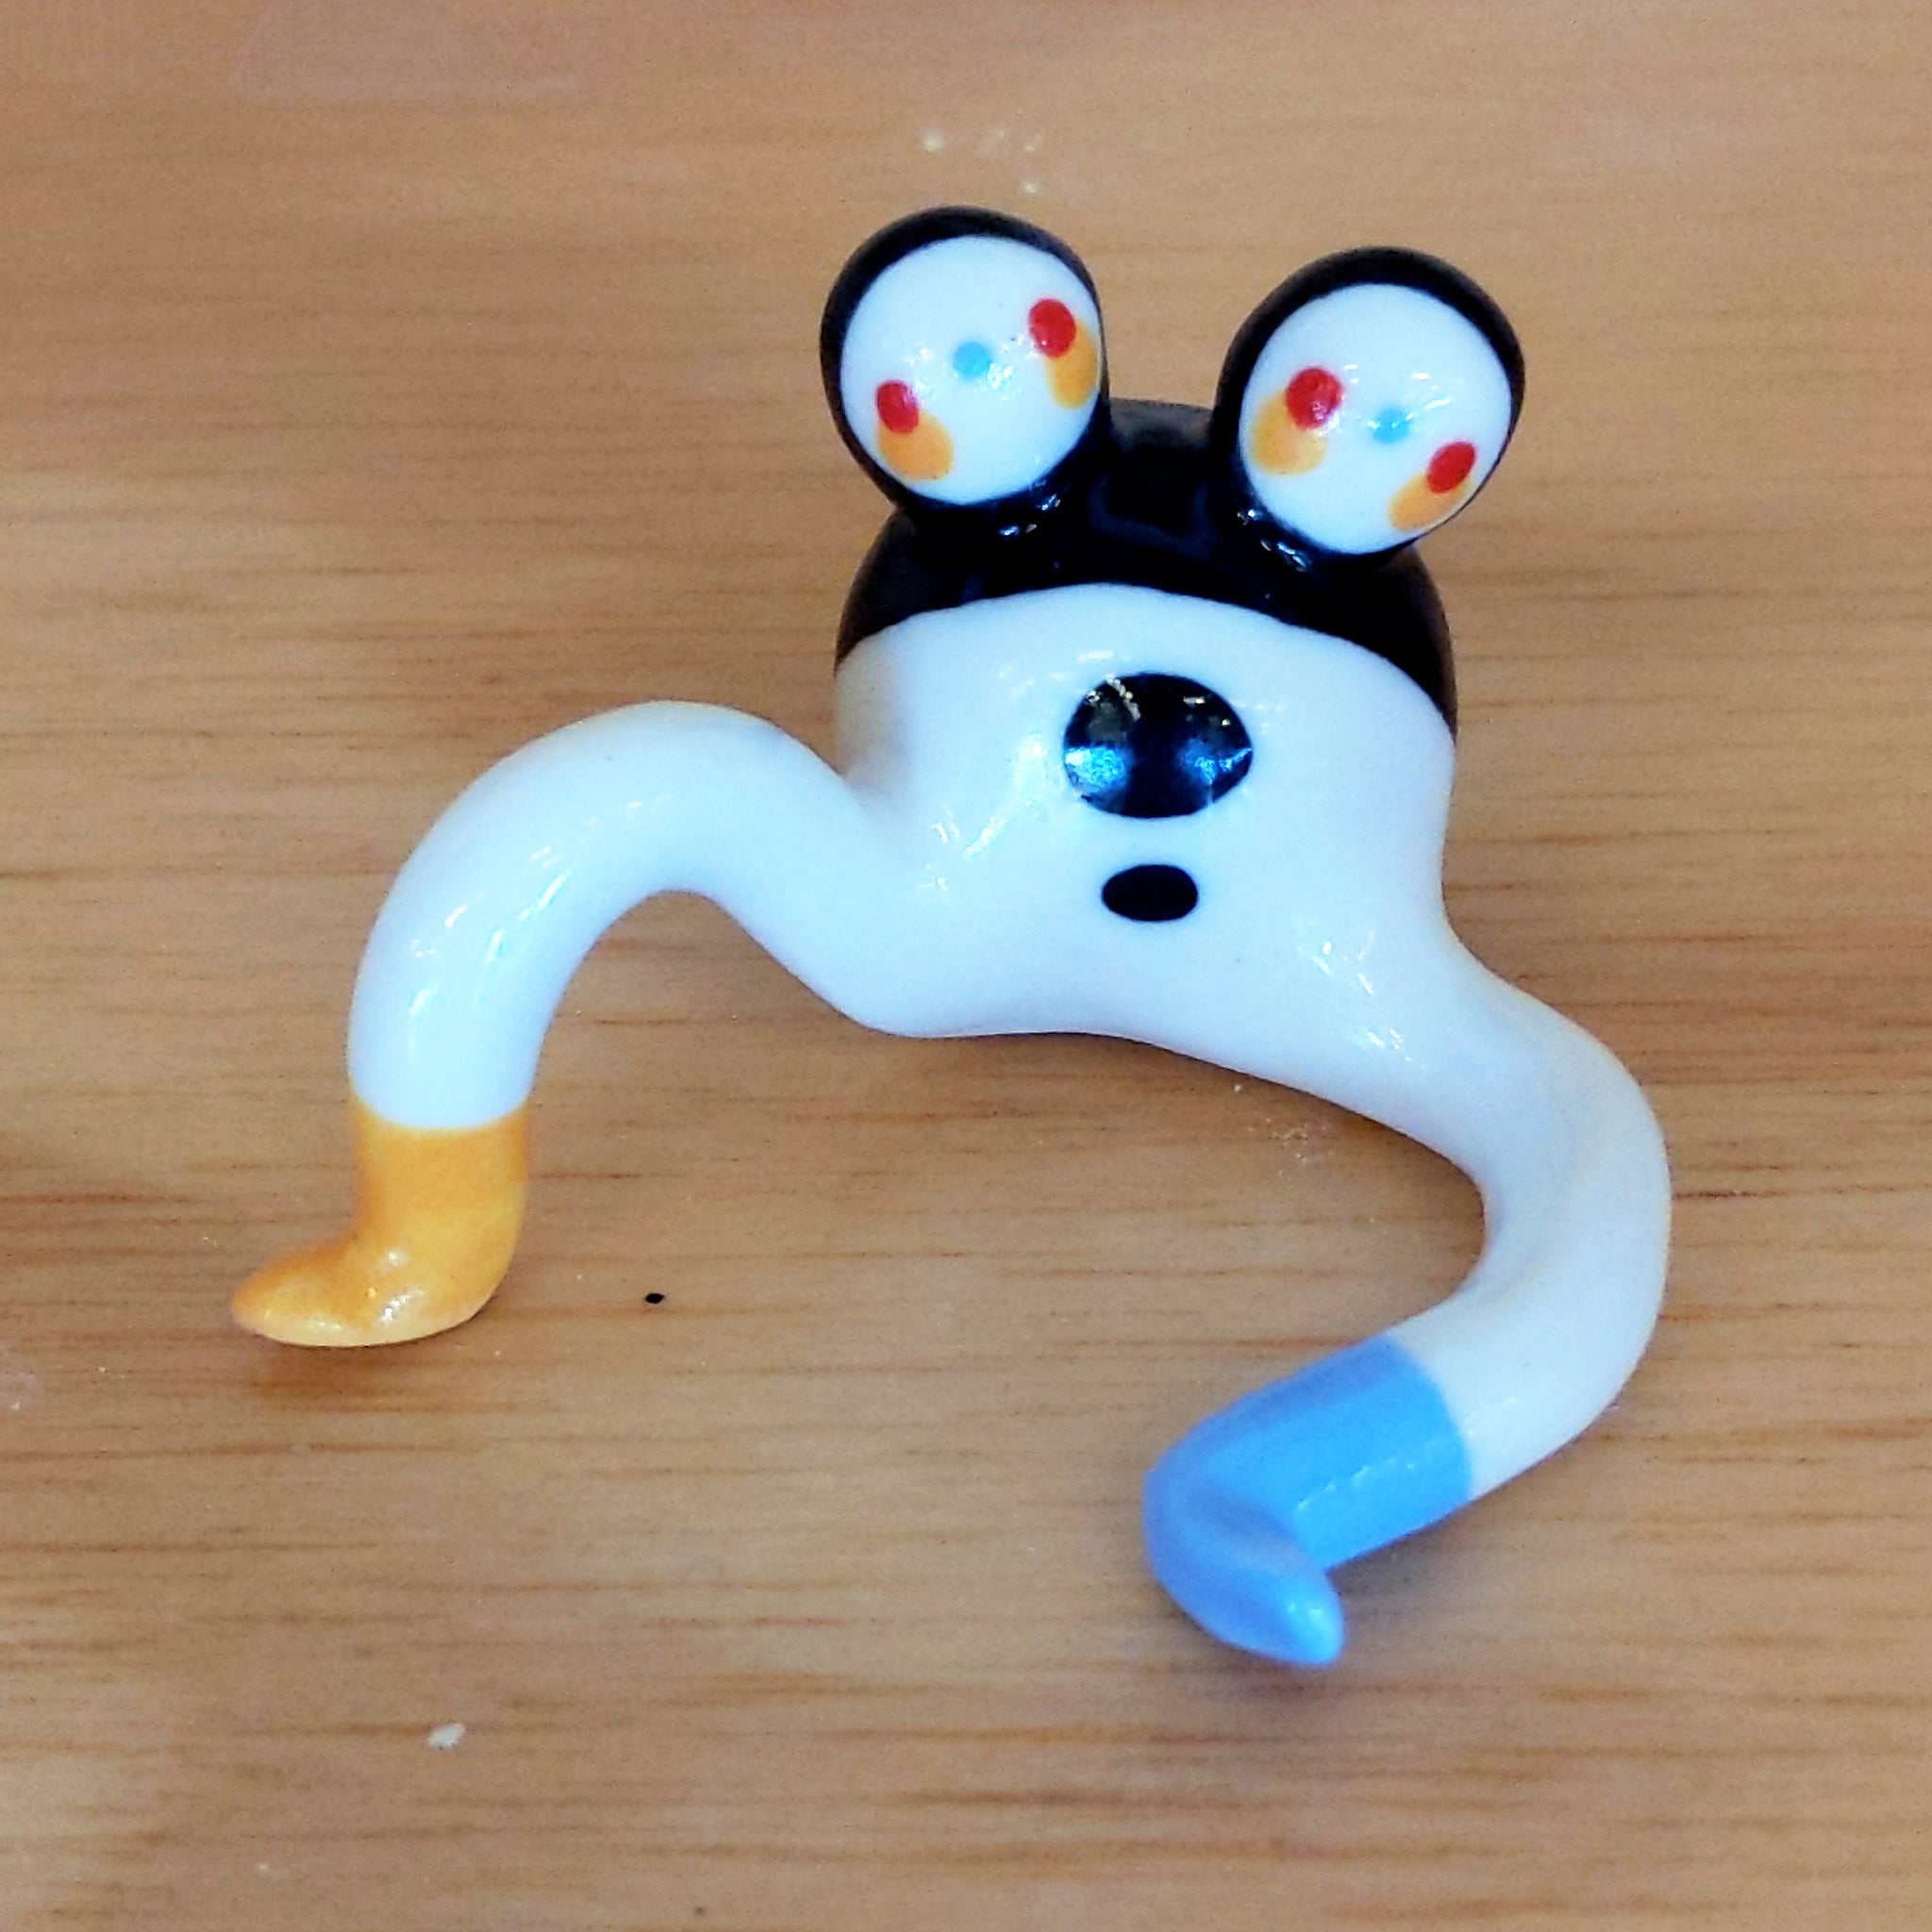 Tinybirdman Ceramic Art Toy [22.008: Two-headed, Left Knee Up]